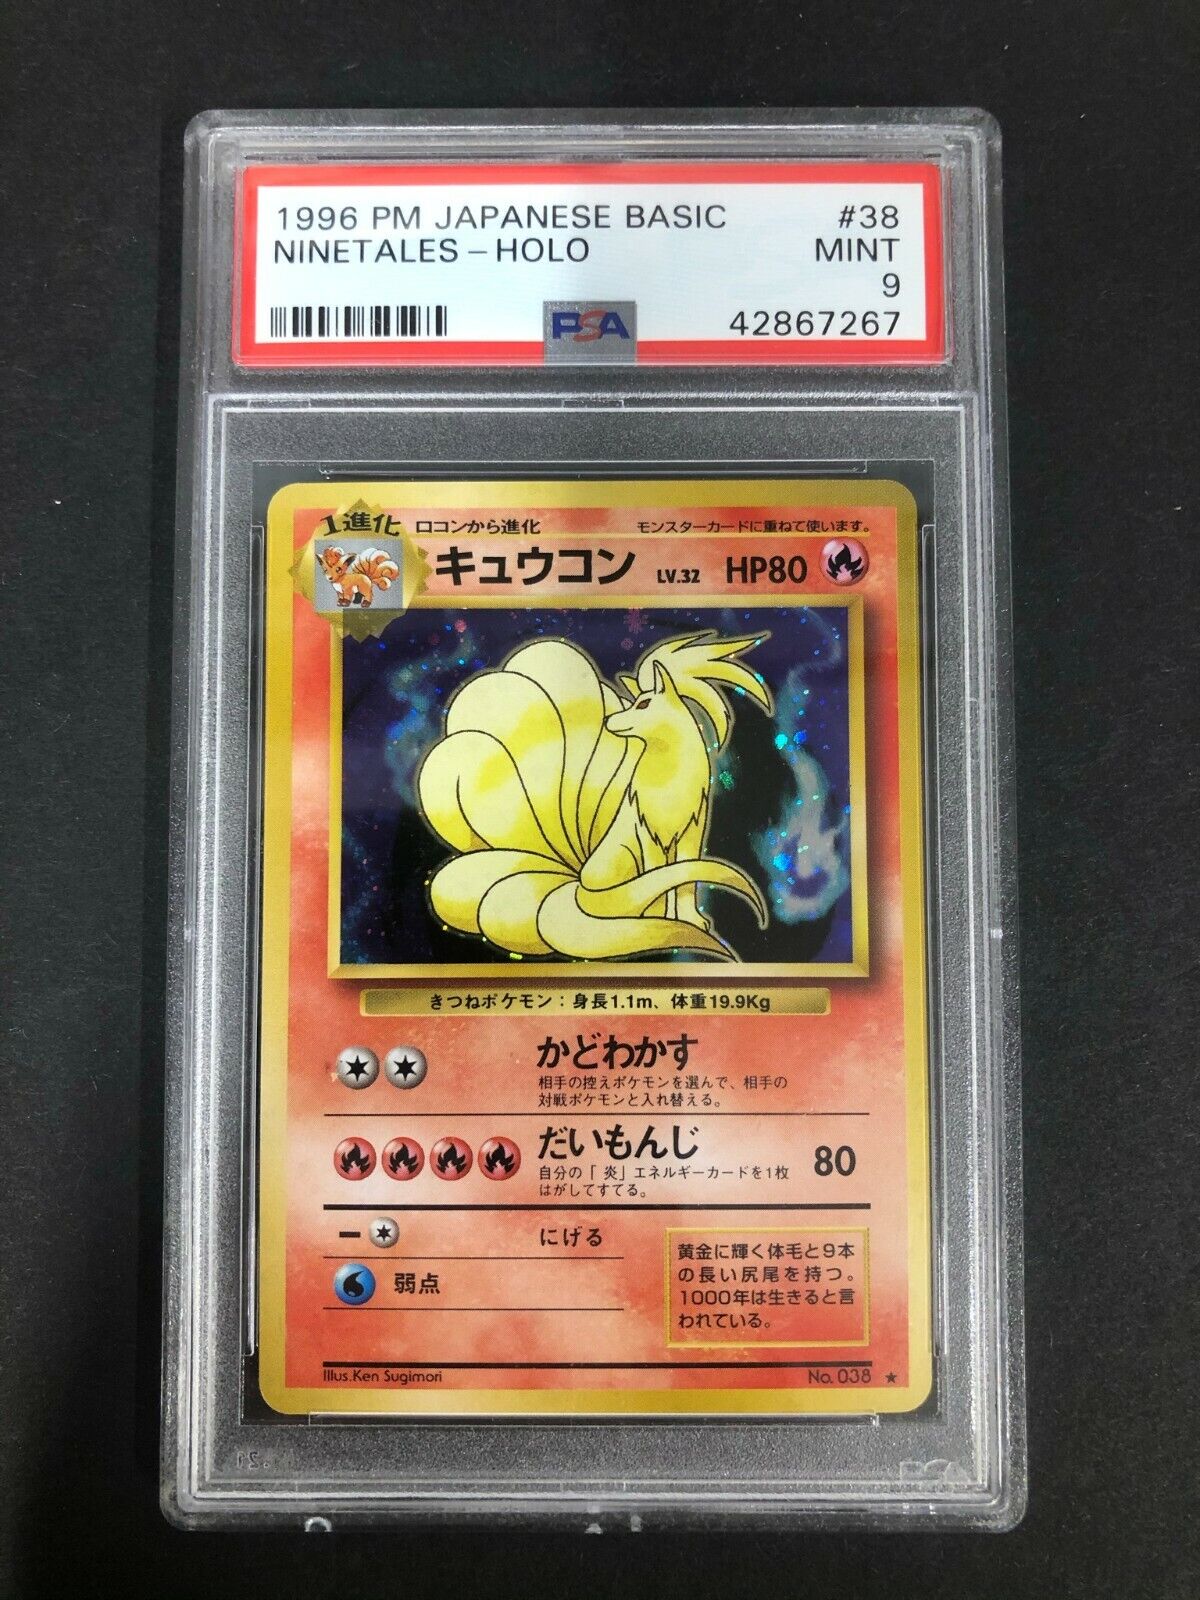 1996 PM Japanese Basic Ninetales Holo PSA 9 Mint Jap Pokemon Card 038 Vintage 38